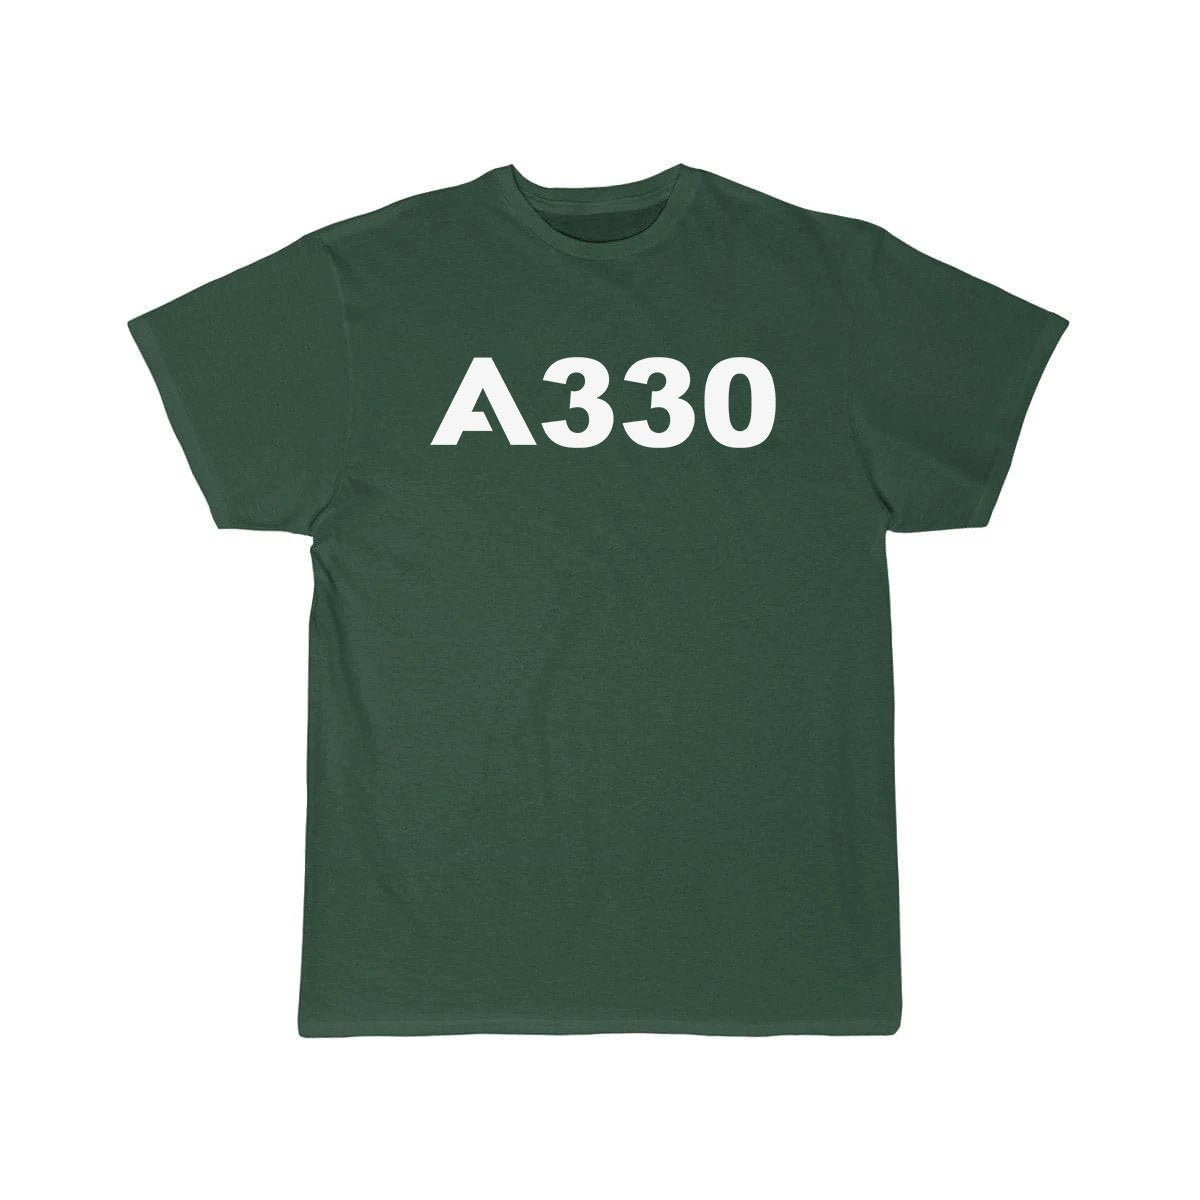 Airbus A330 Aviation Pilot T-Shirt THE AV8R